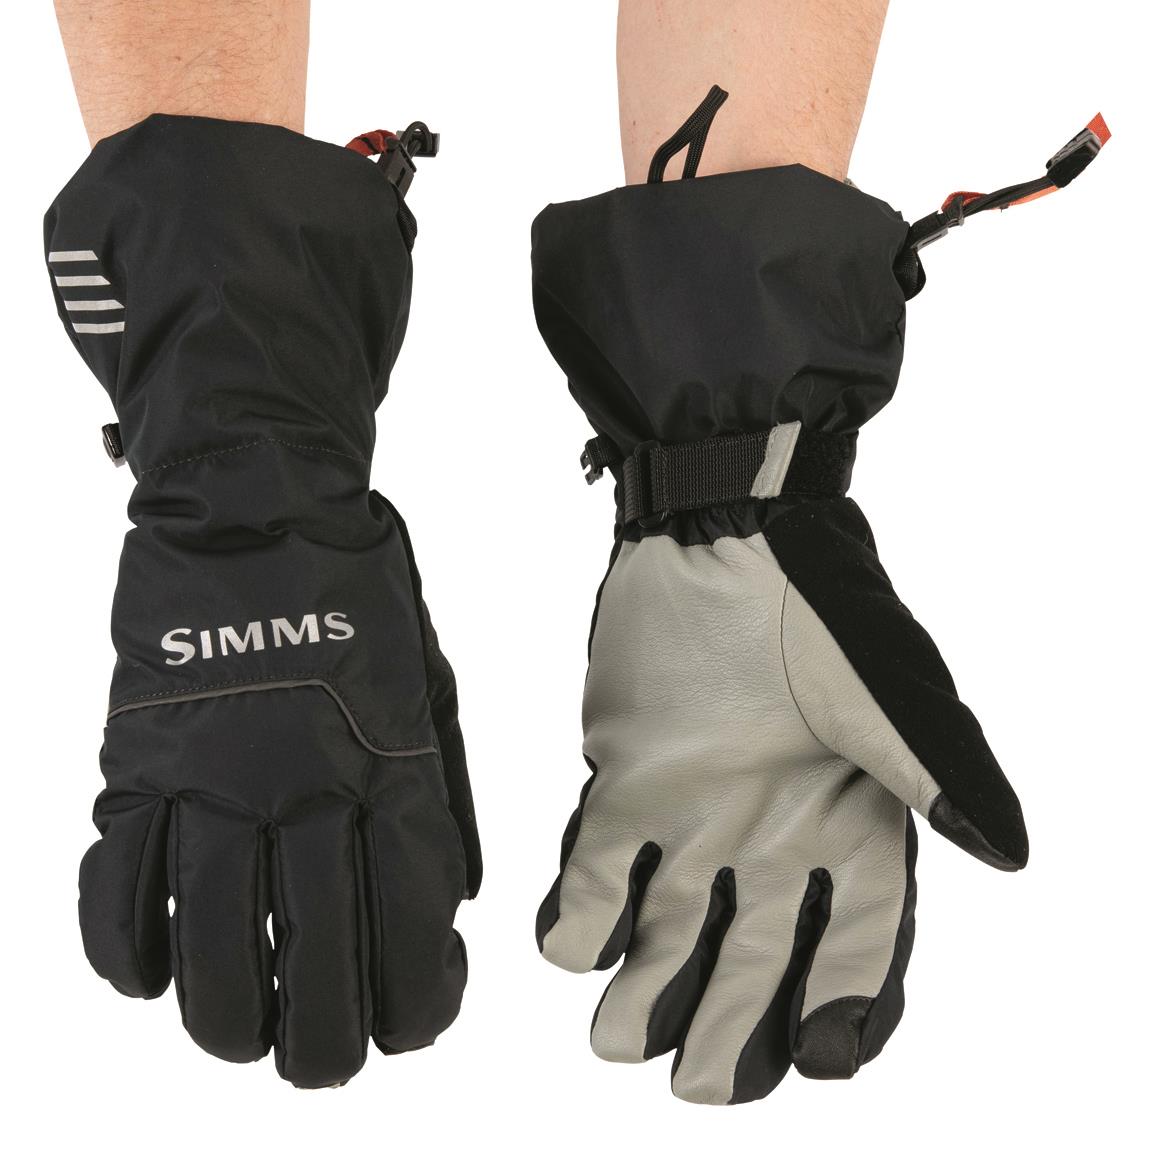 StrikerICE Men's Attack Ice Fishing Gloves - 725213, Gloves